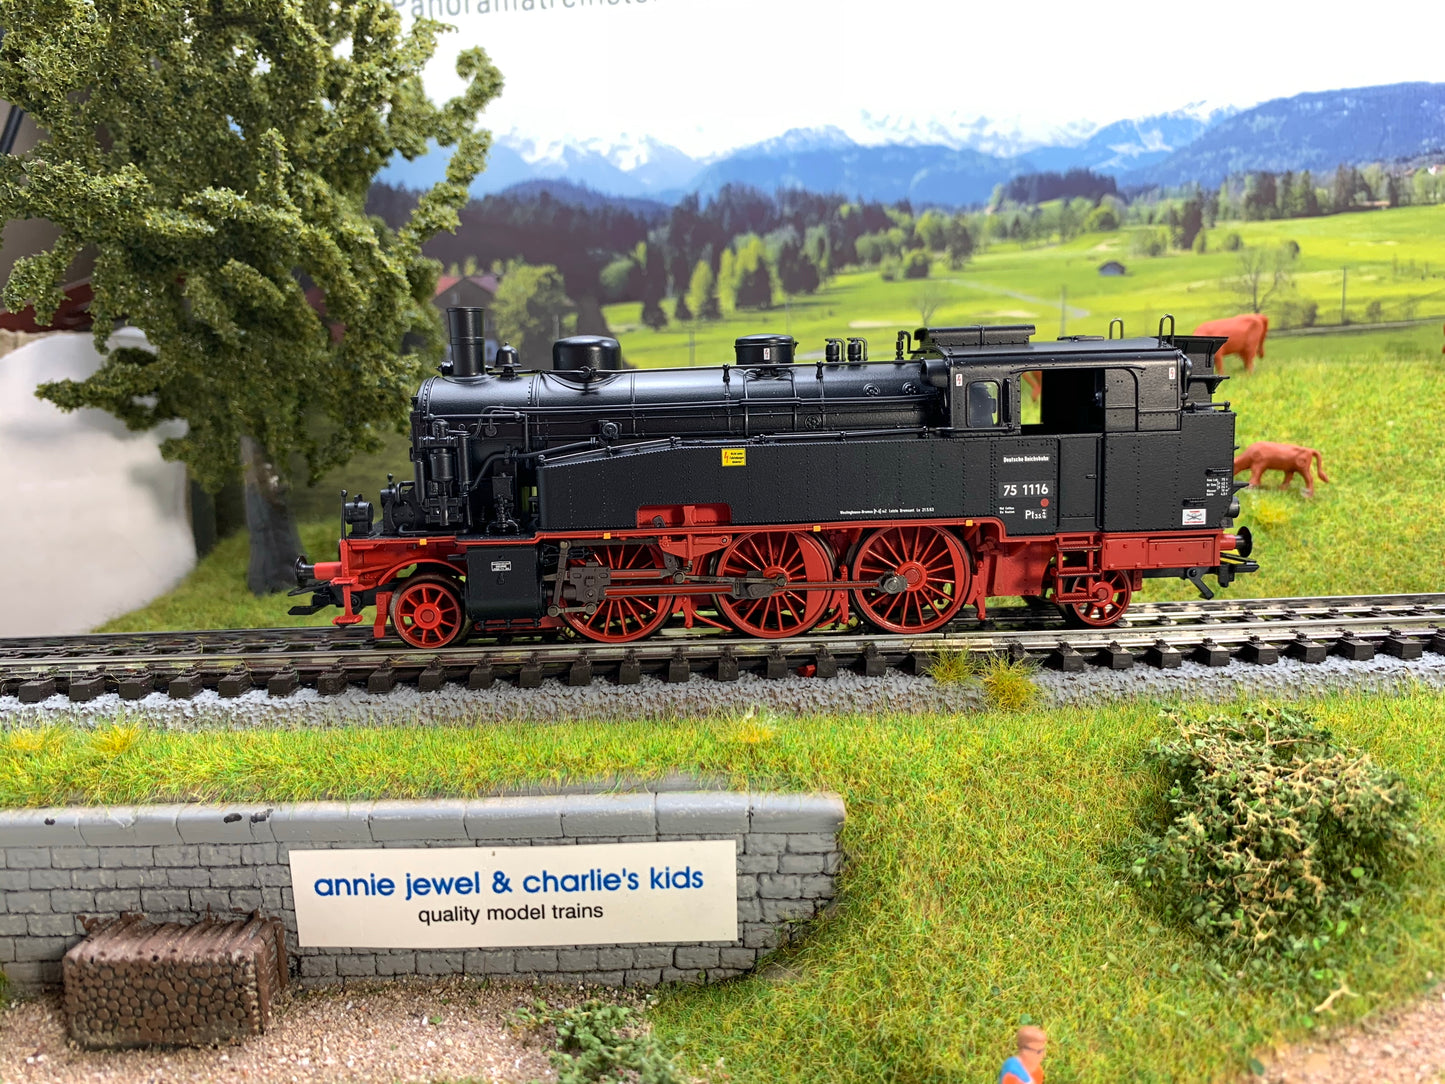 Marklin 39758 - Class 75.4 Steam Locomotive